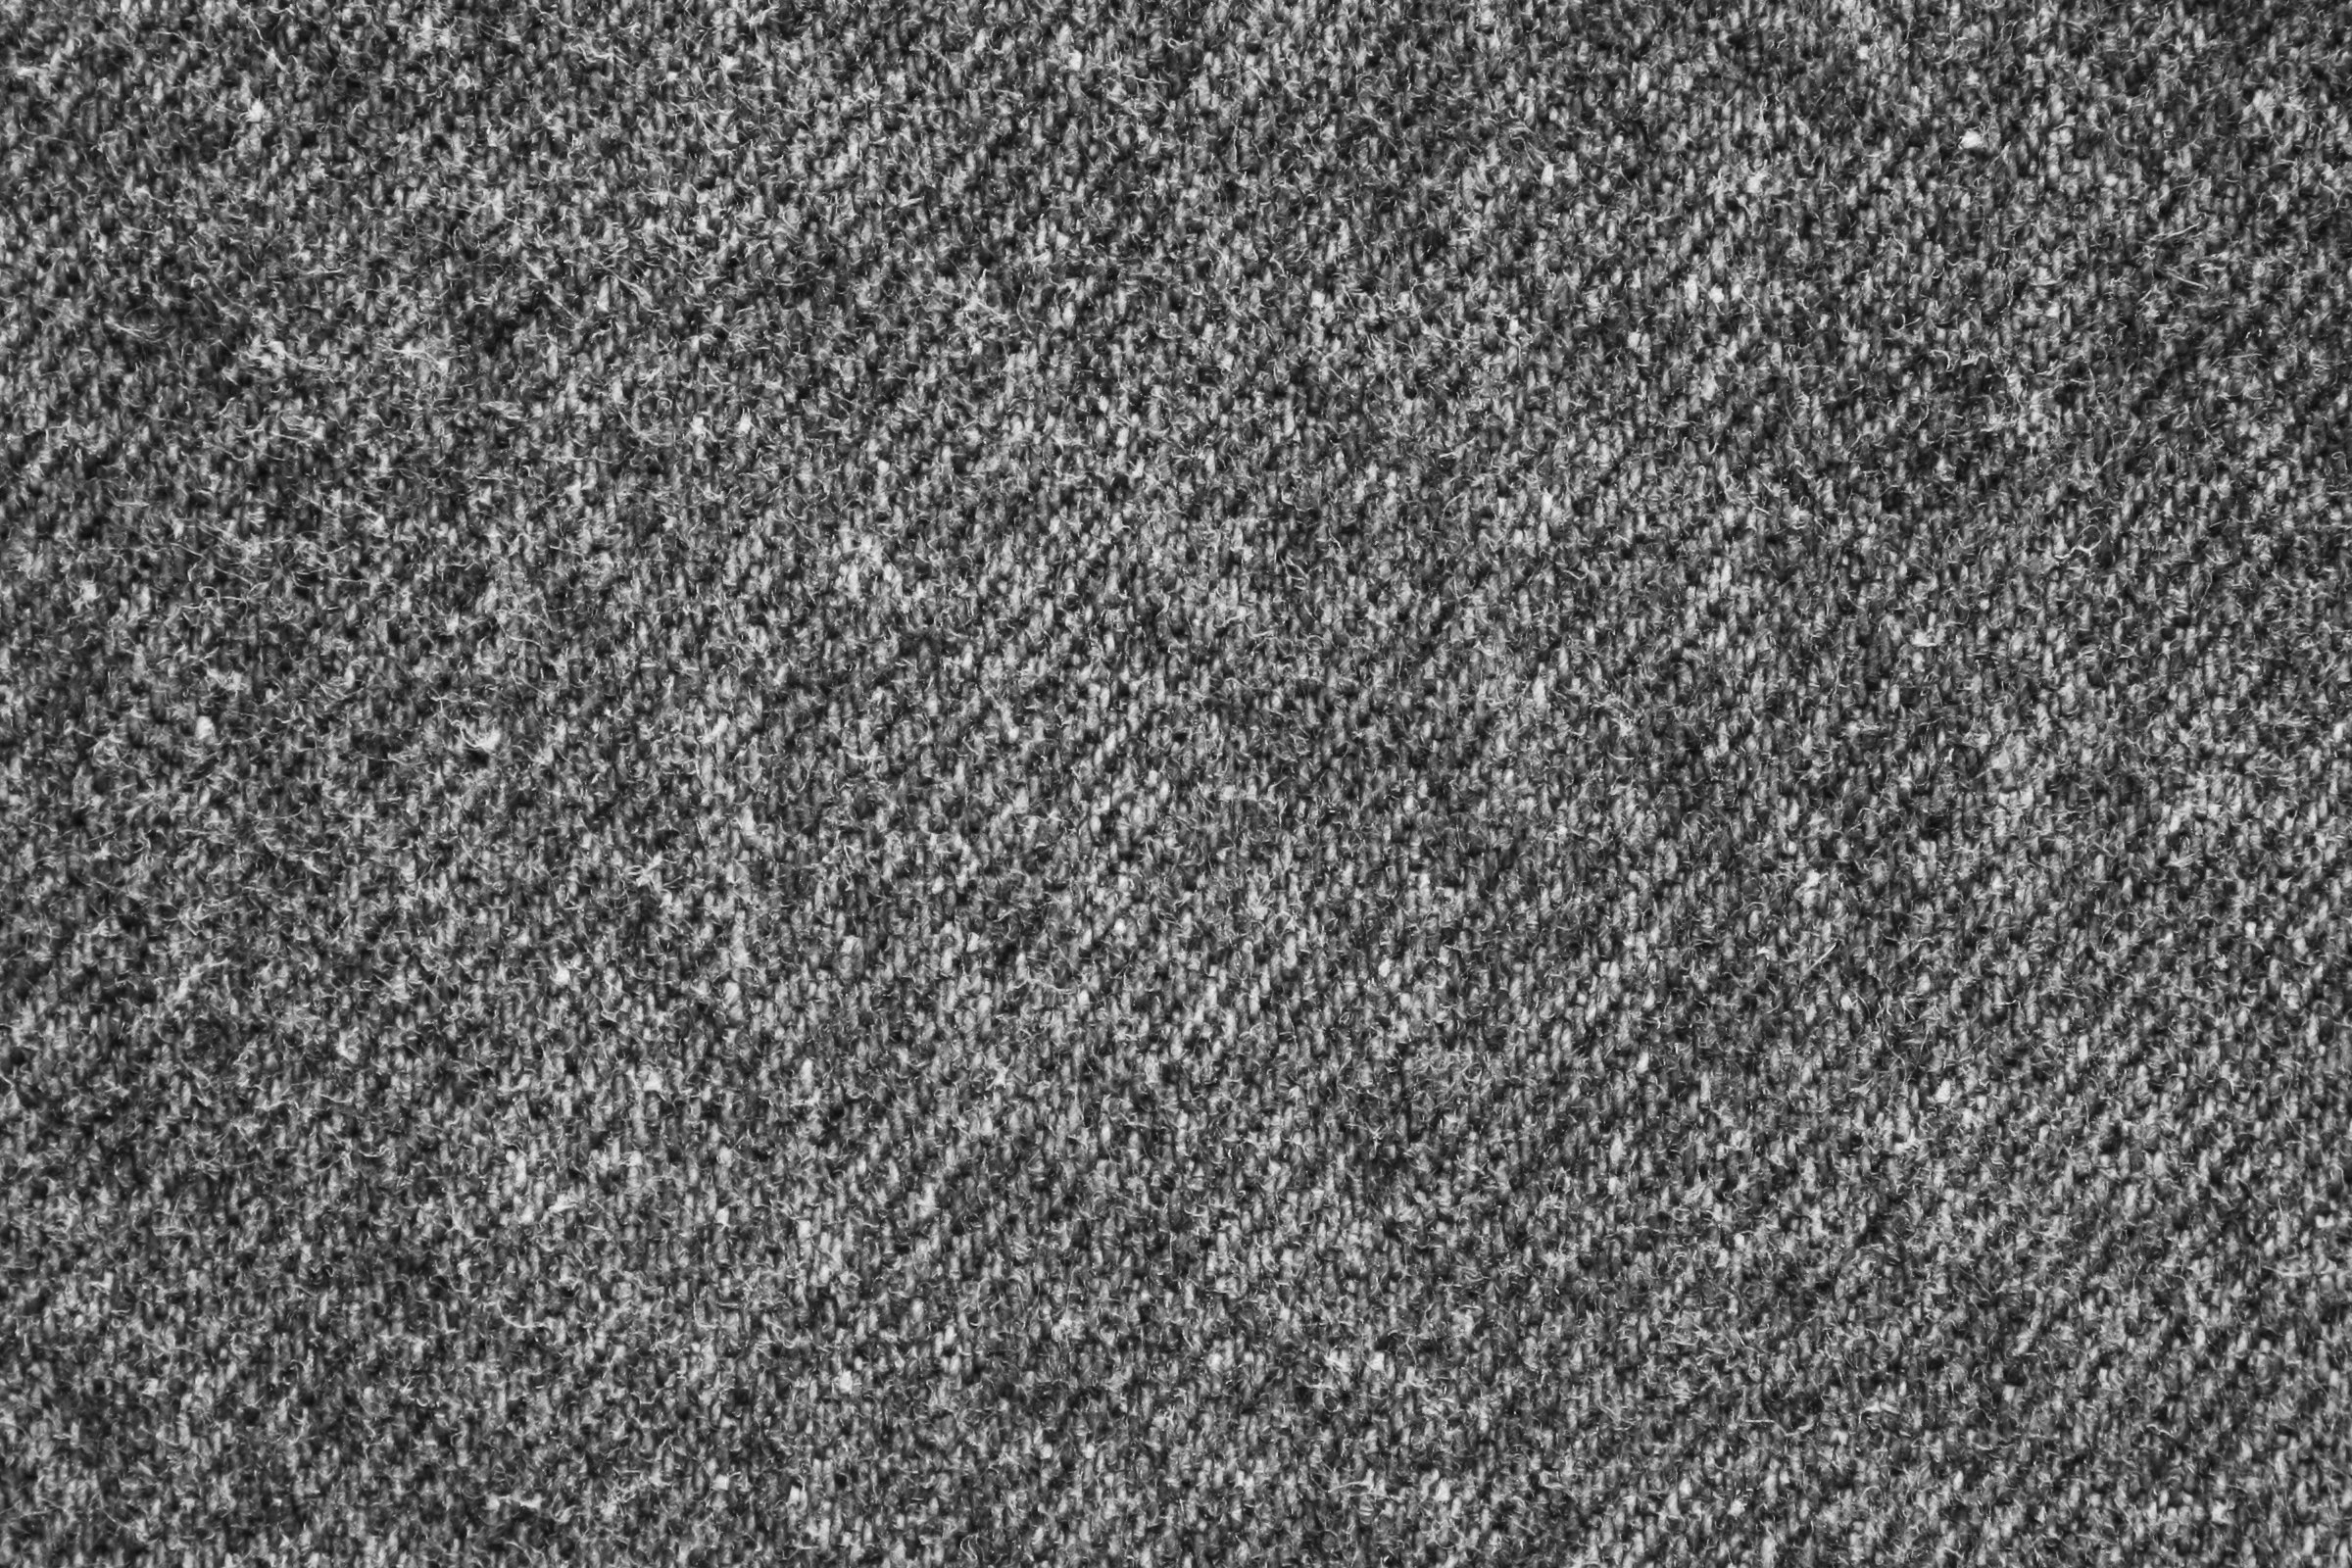 satelliet betreden rukken Gray Denim Fabric Texture Picture | Free Photograph | Photos Public Domain